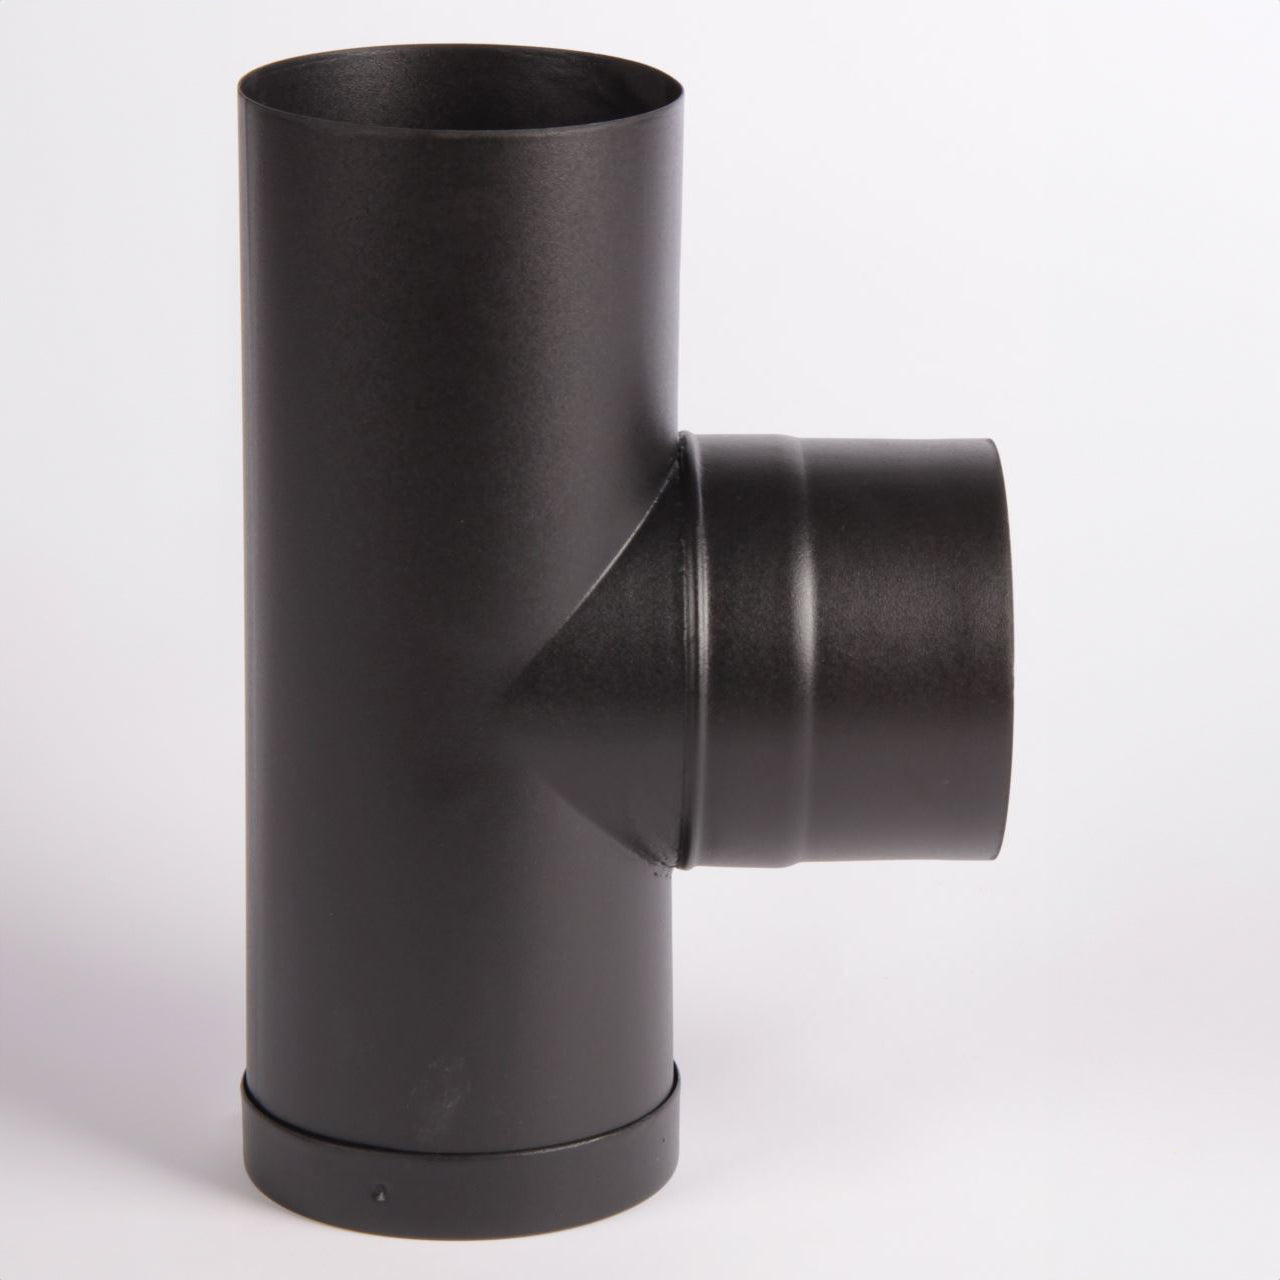 Black Vitreous Stove Pipe - 90 deg tee with tee cap - 150mm